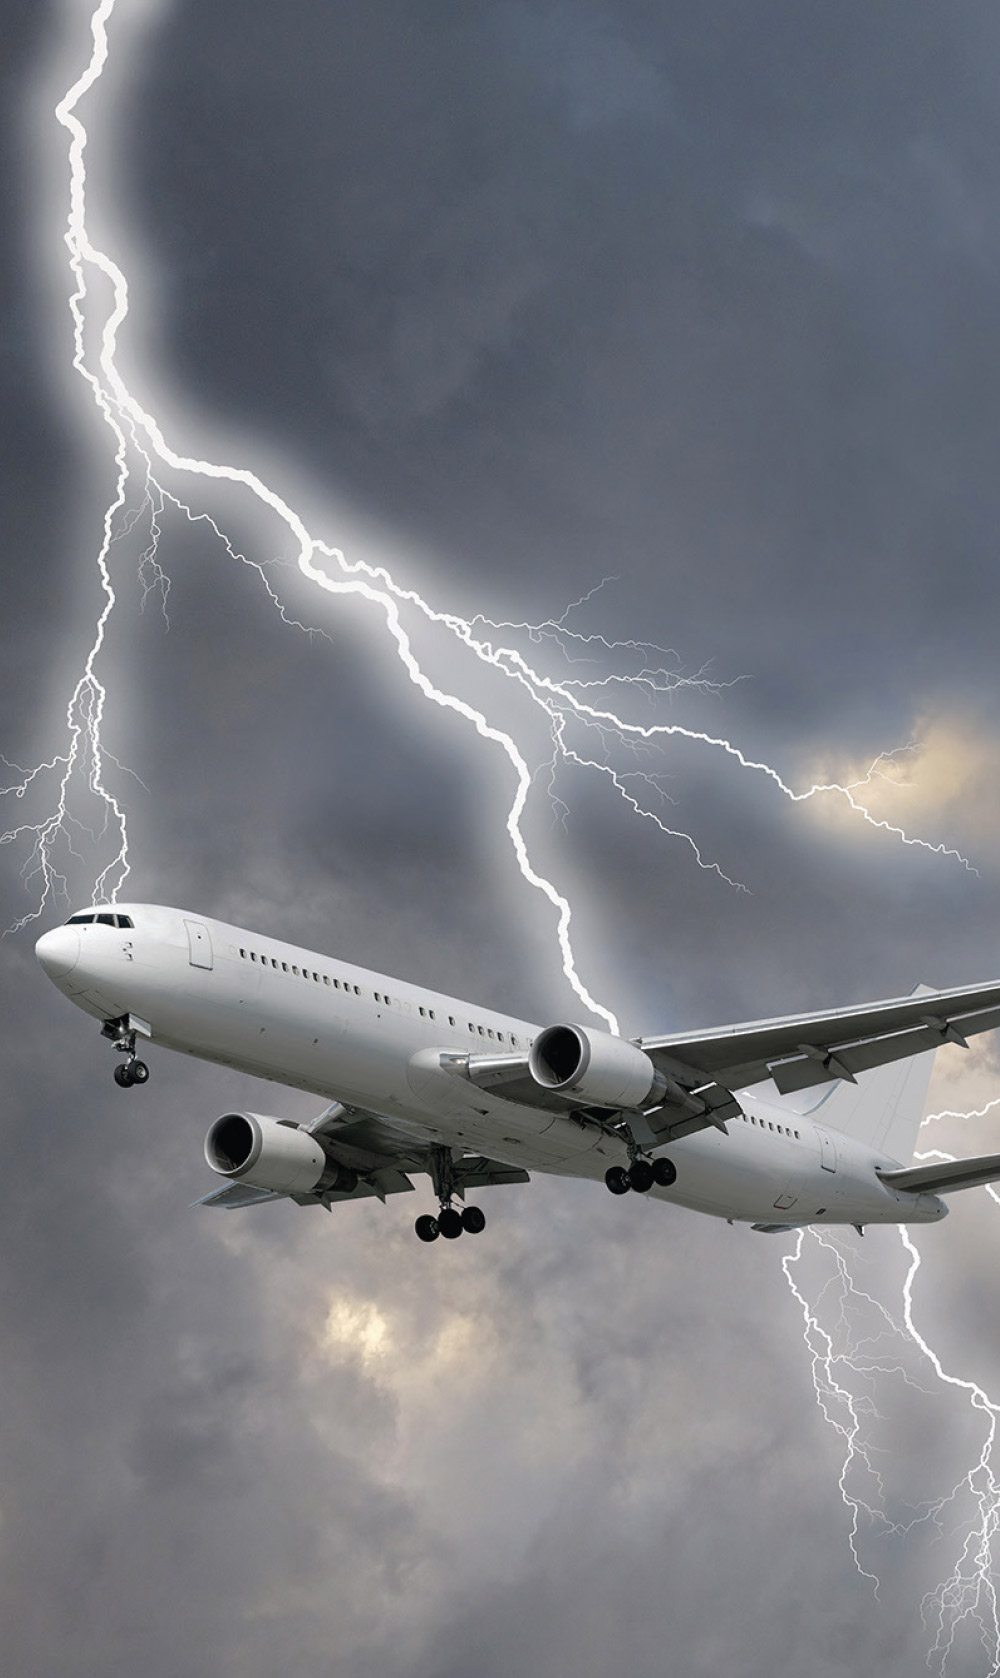 Airplane going through thunder